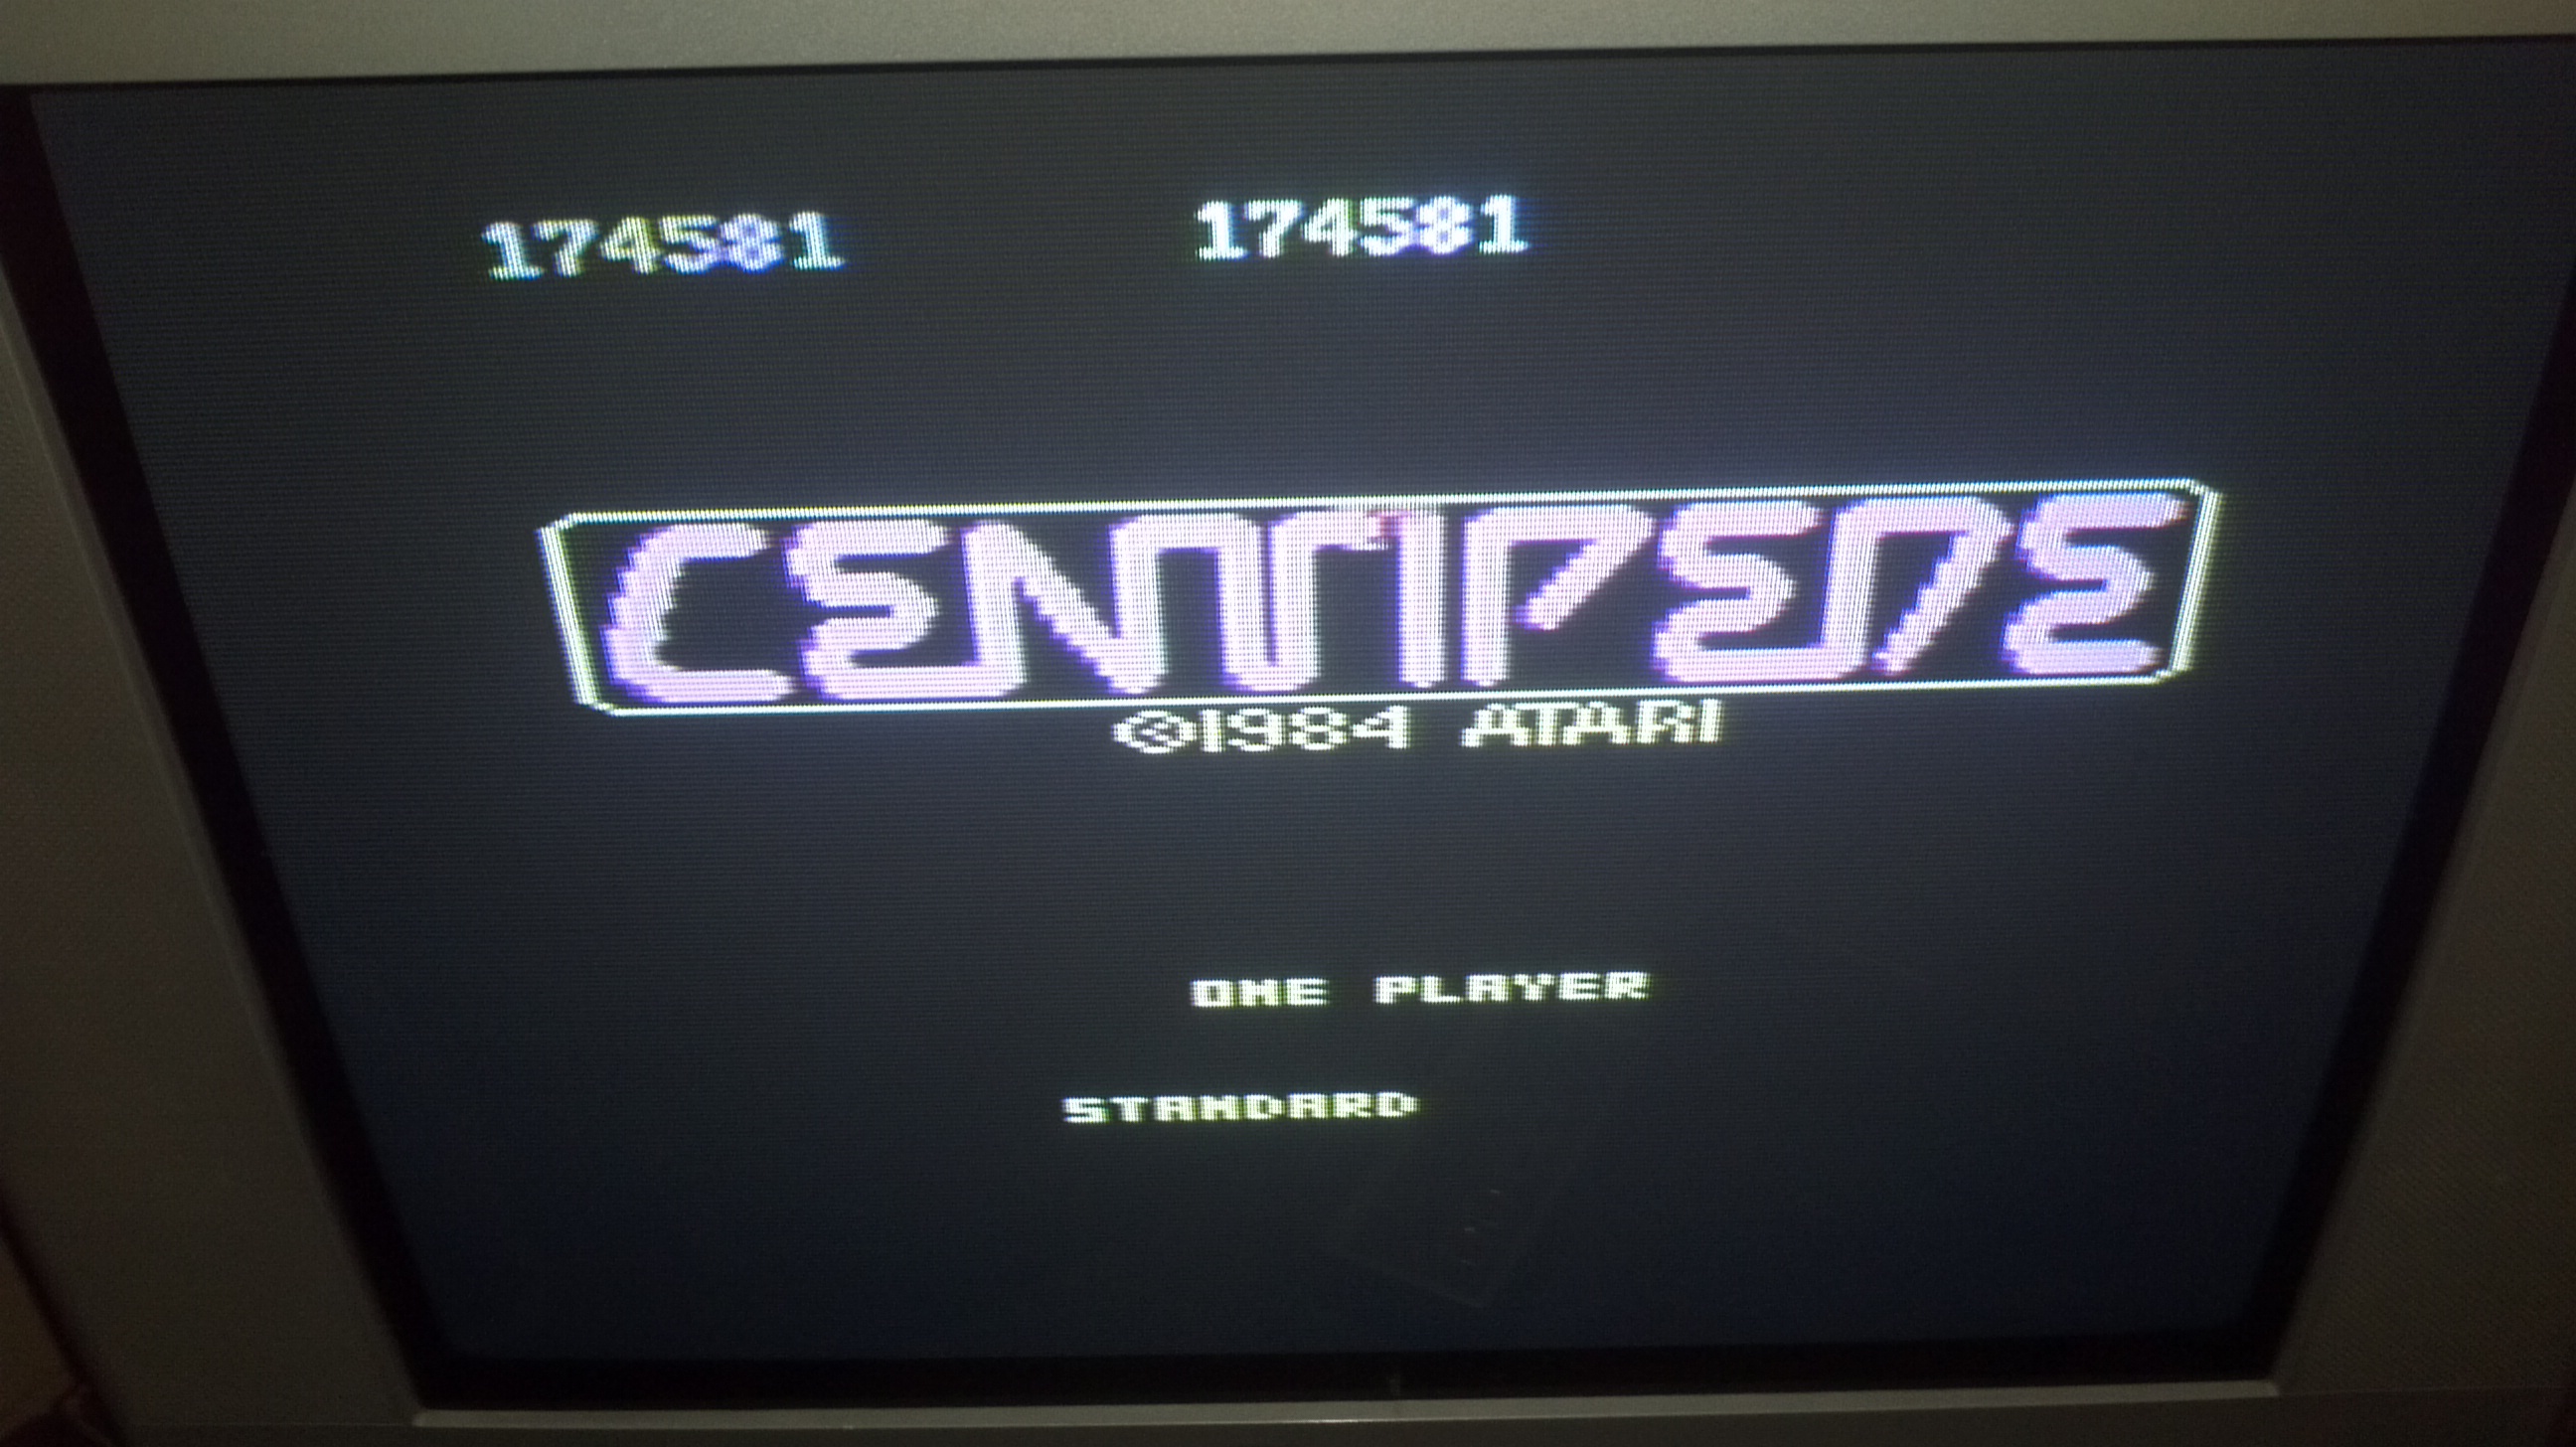 Liduario: Centipede: Standard (Atari 7800) 174,581 points on 2017-10-01 05:38:35